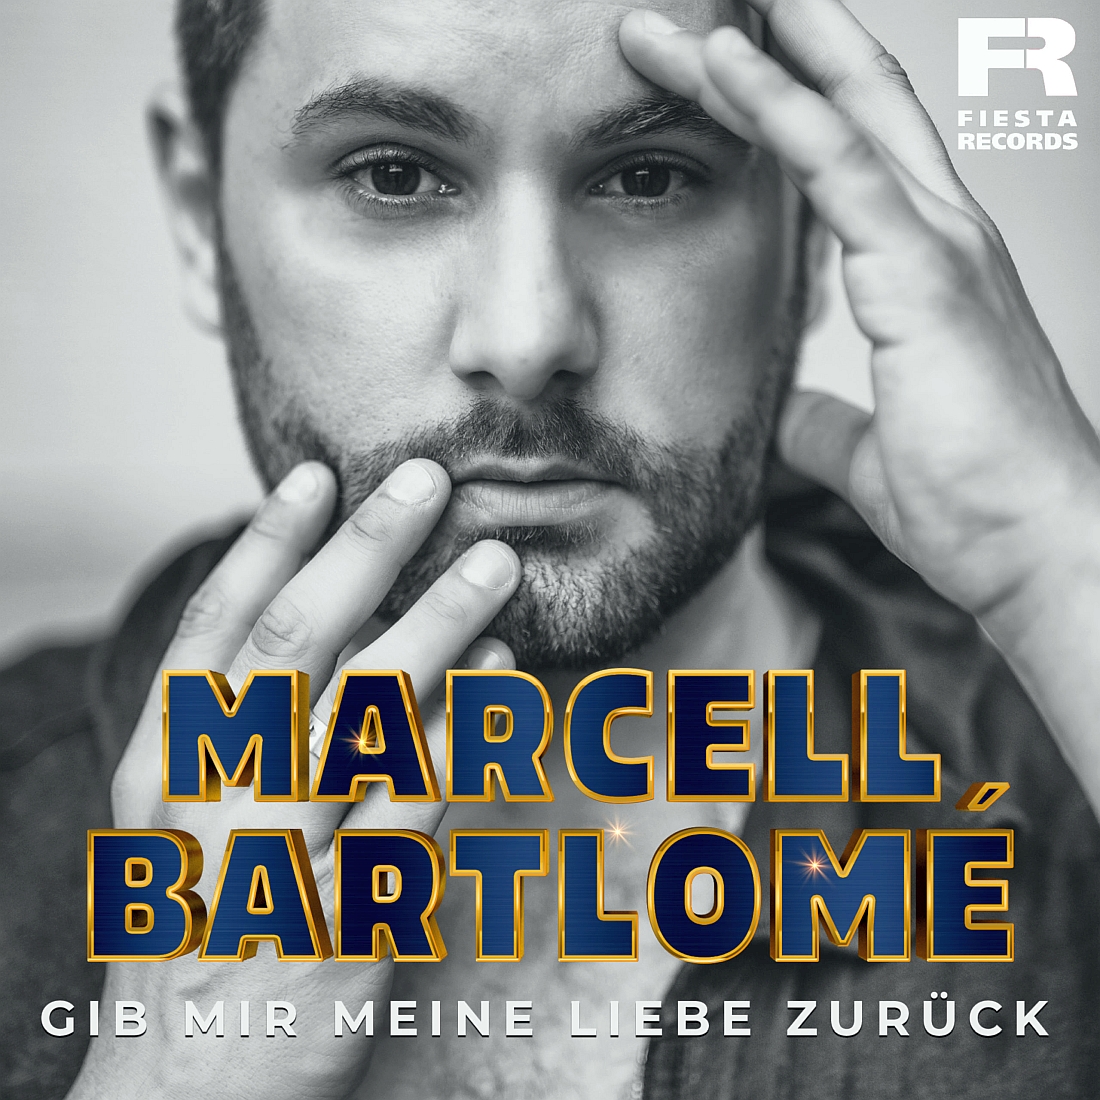 Marcell Bartlomé - Gib mir meine Liebe zurück (Fiesta Records)